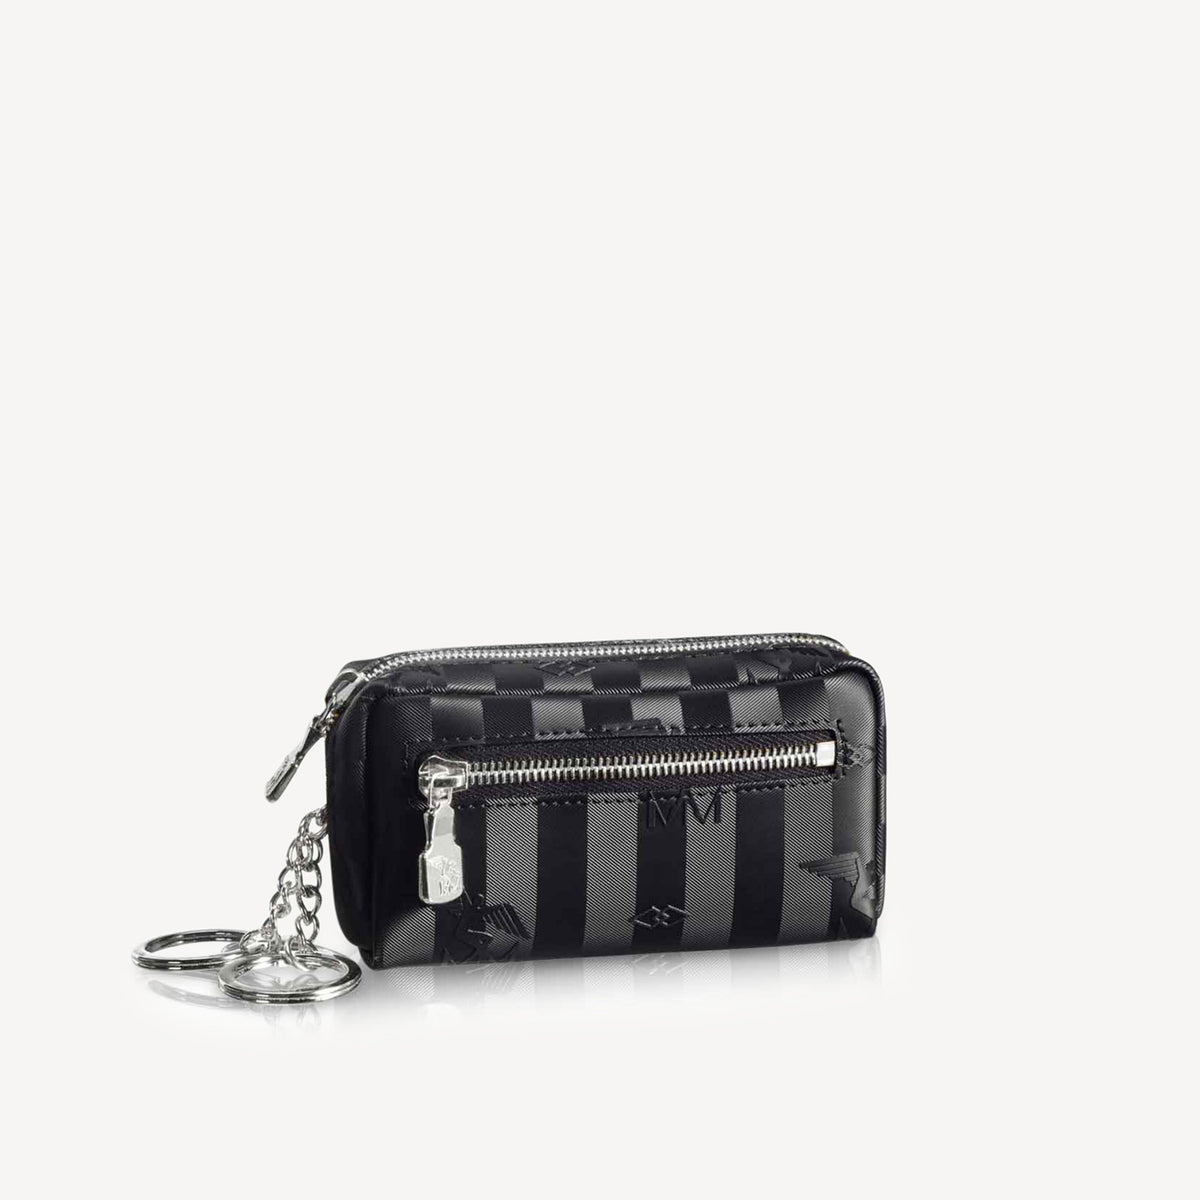 DOM | Schlüsseletui classic schwarz/silber